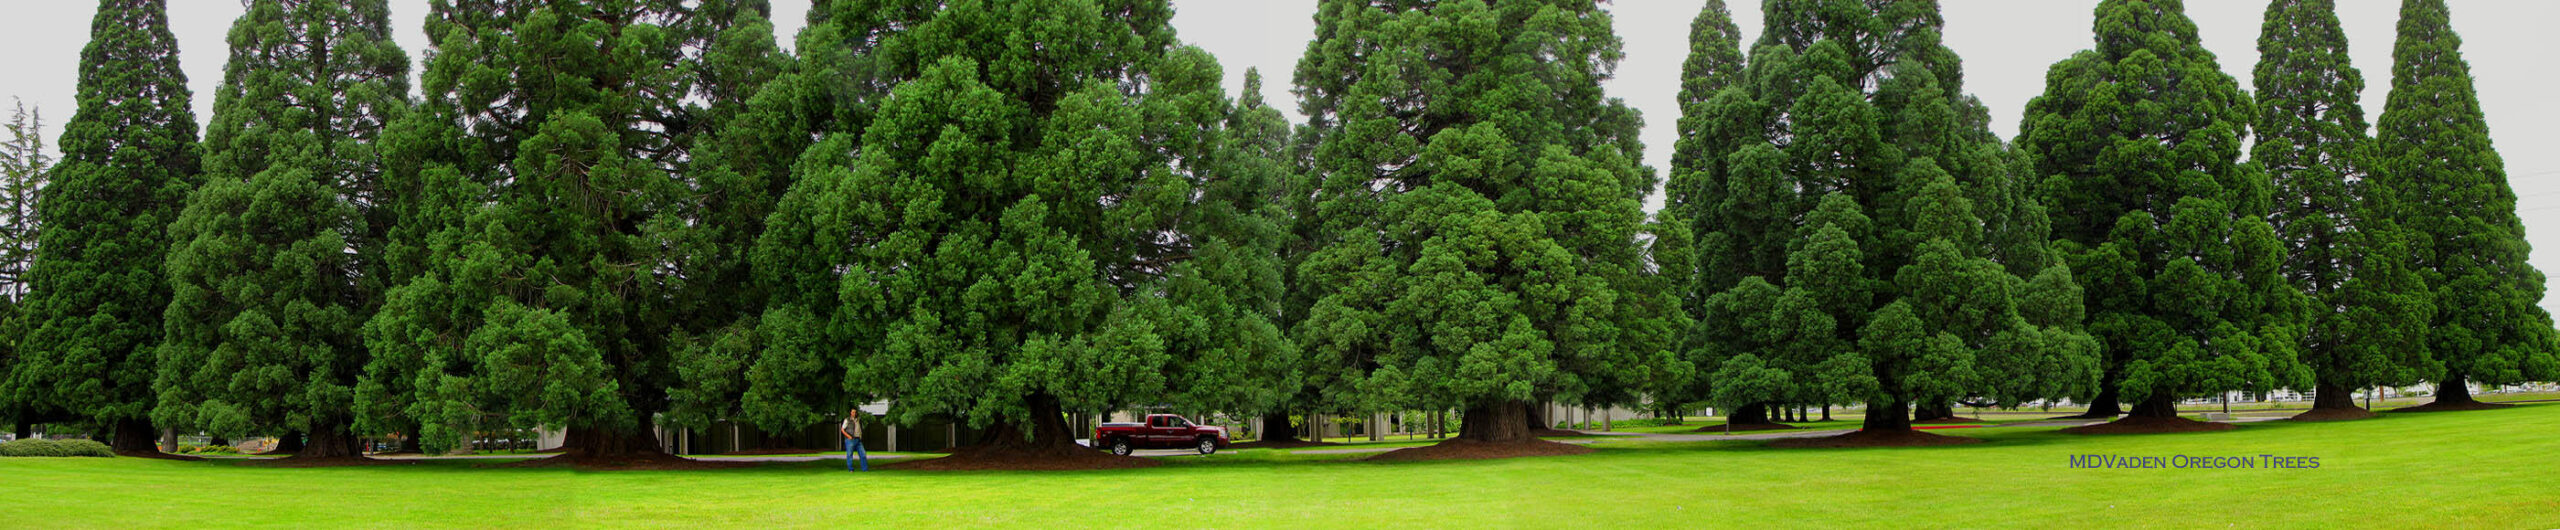 MD Vaden Oregon trees